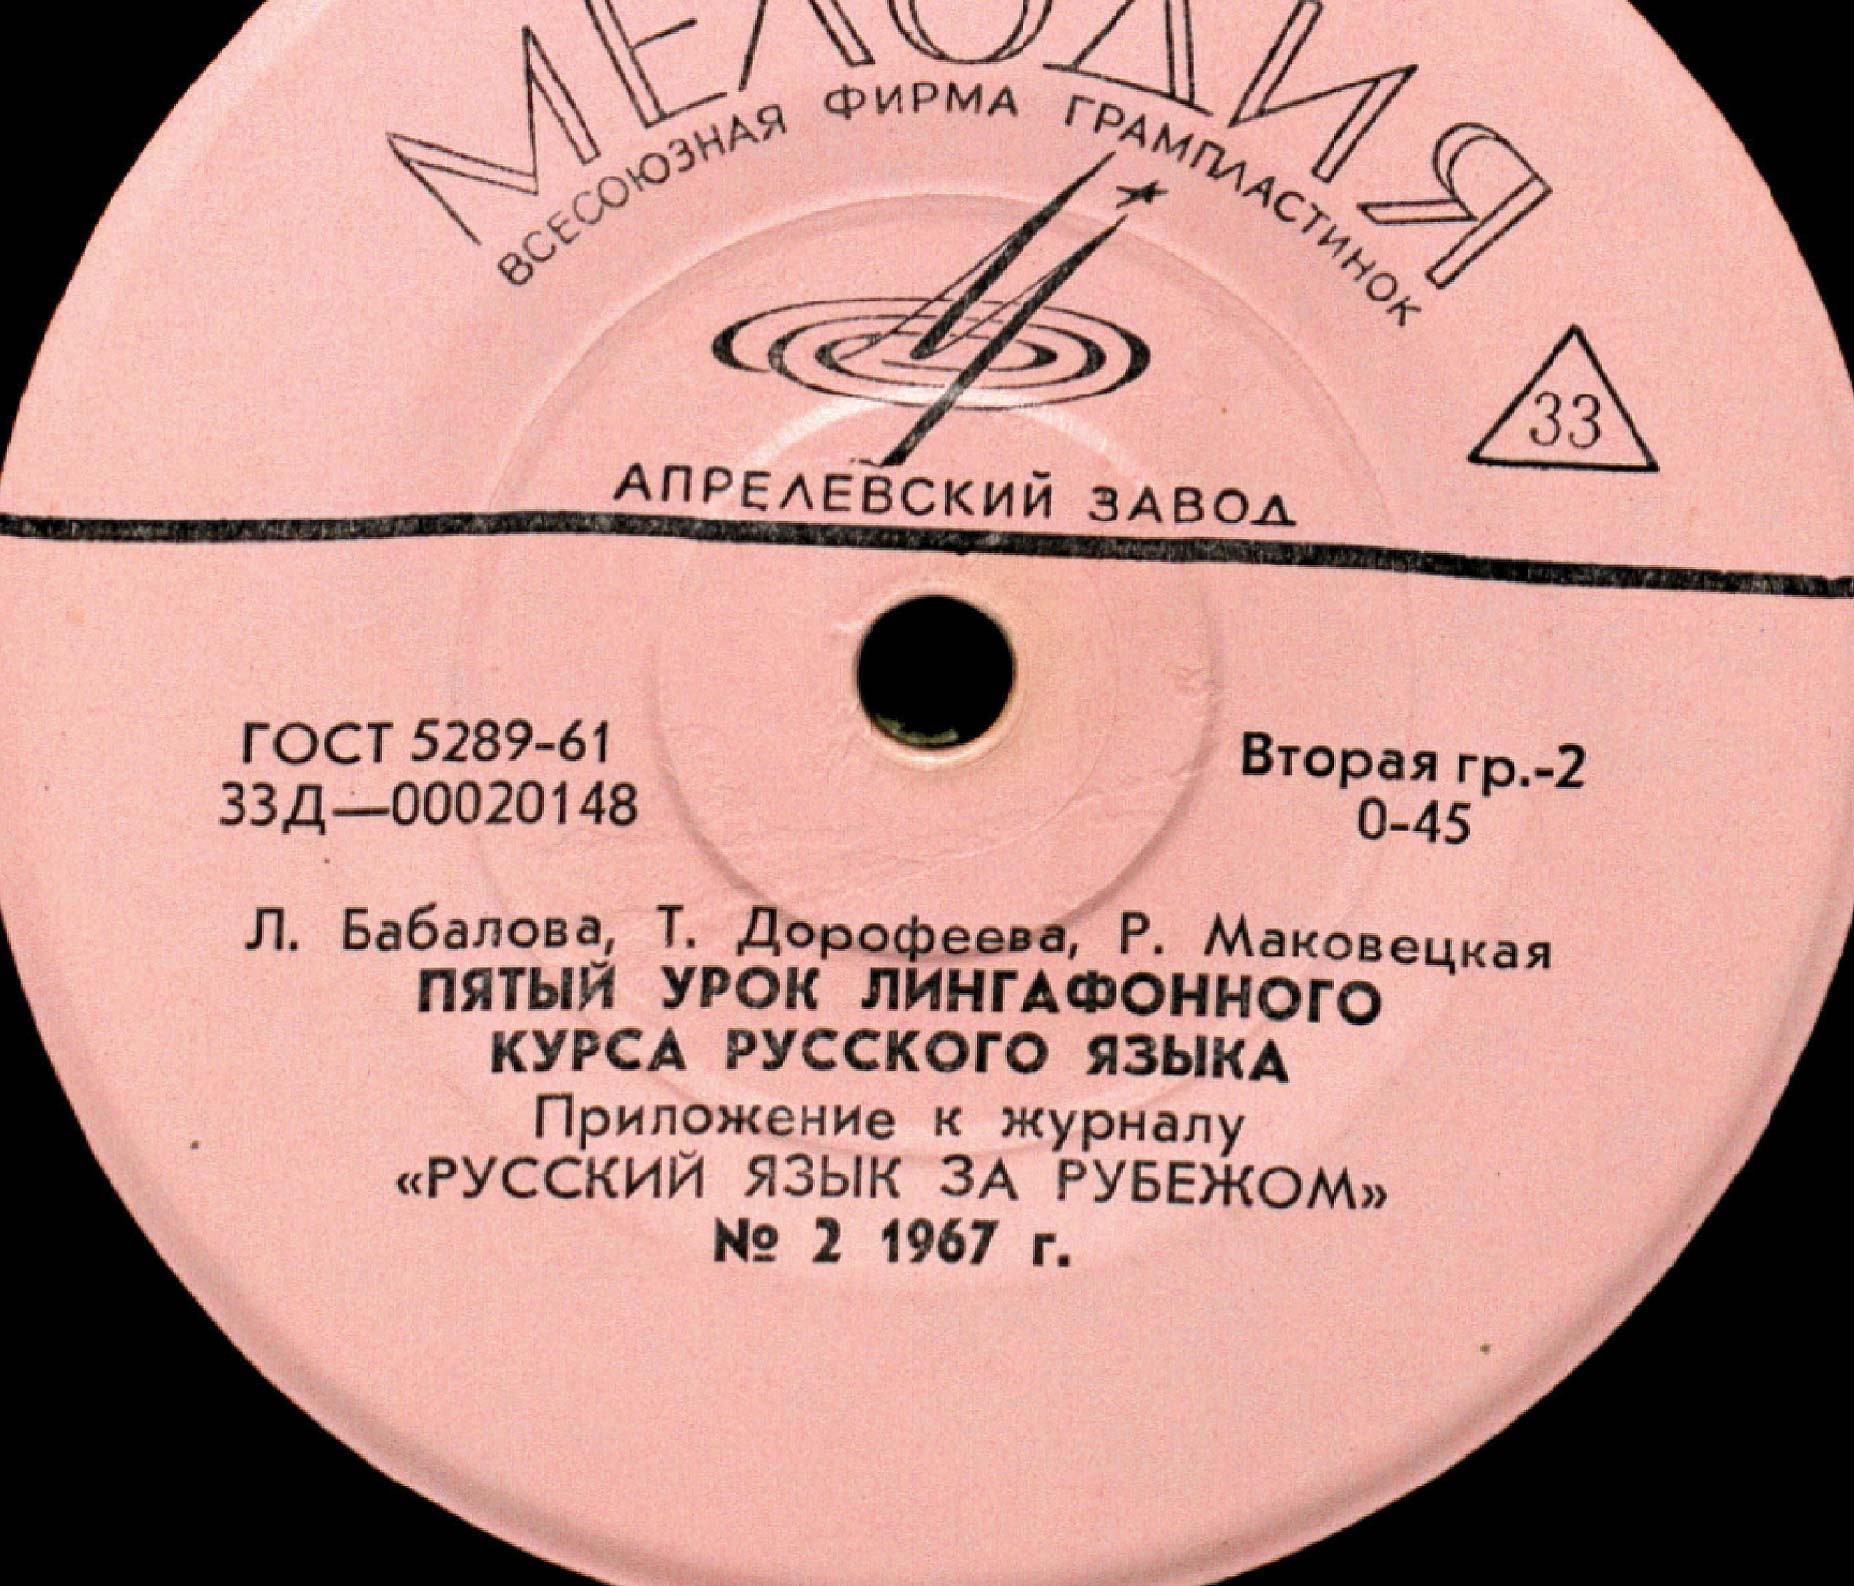 "РУССКИЙ ЯЗЫК ЗА РУБЕЖОМ", № 2 - 1967